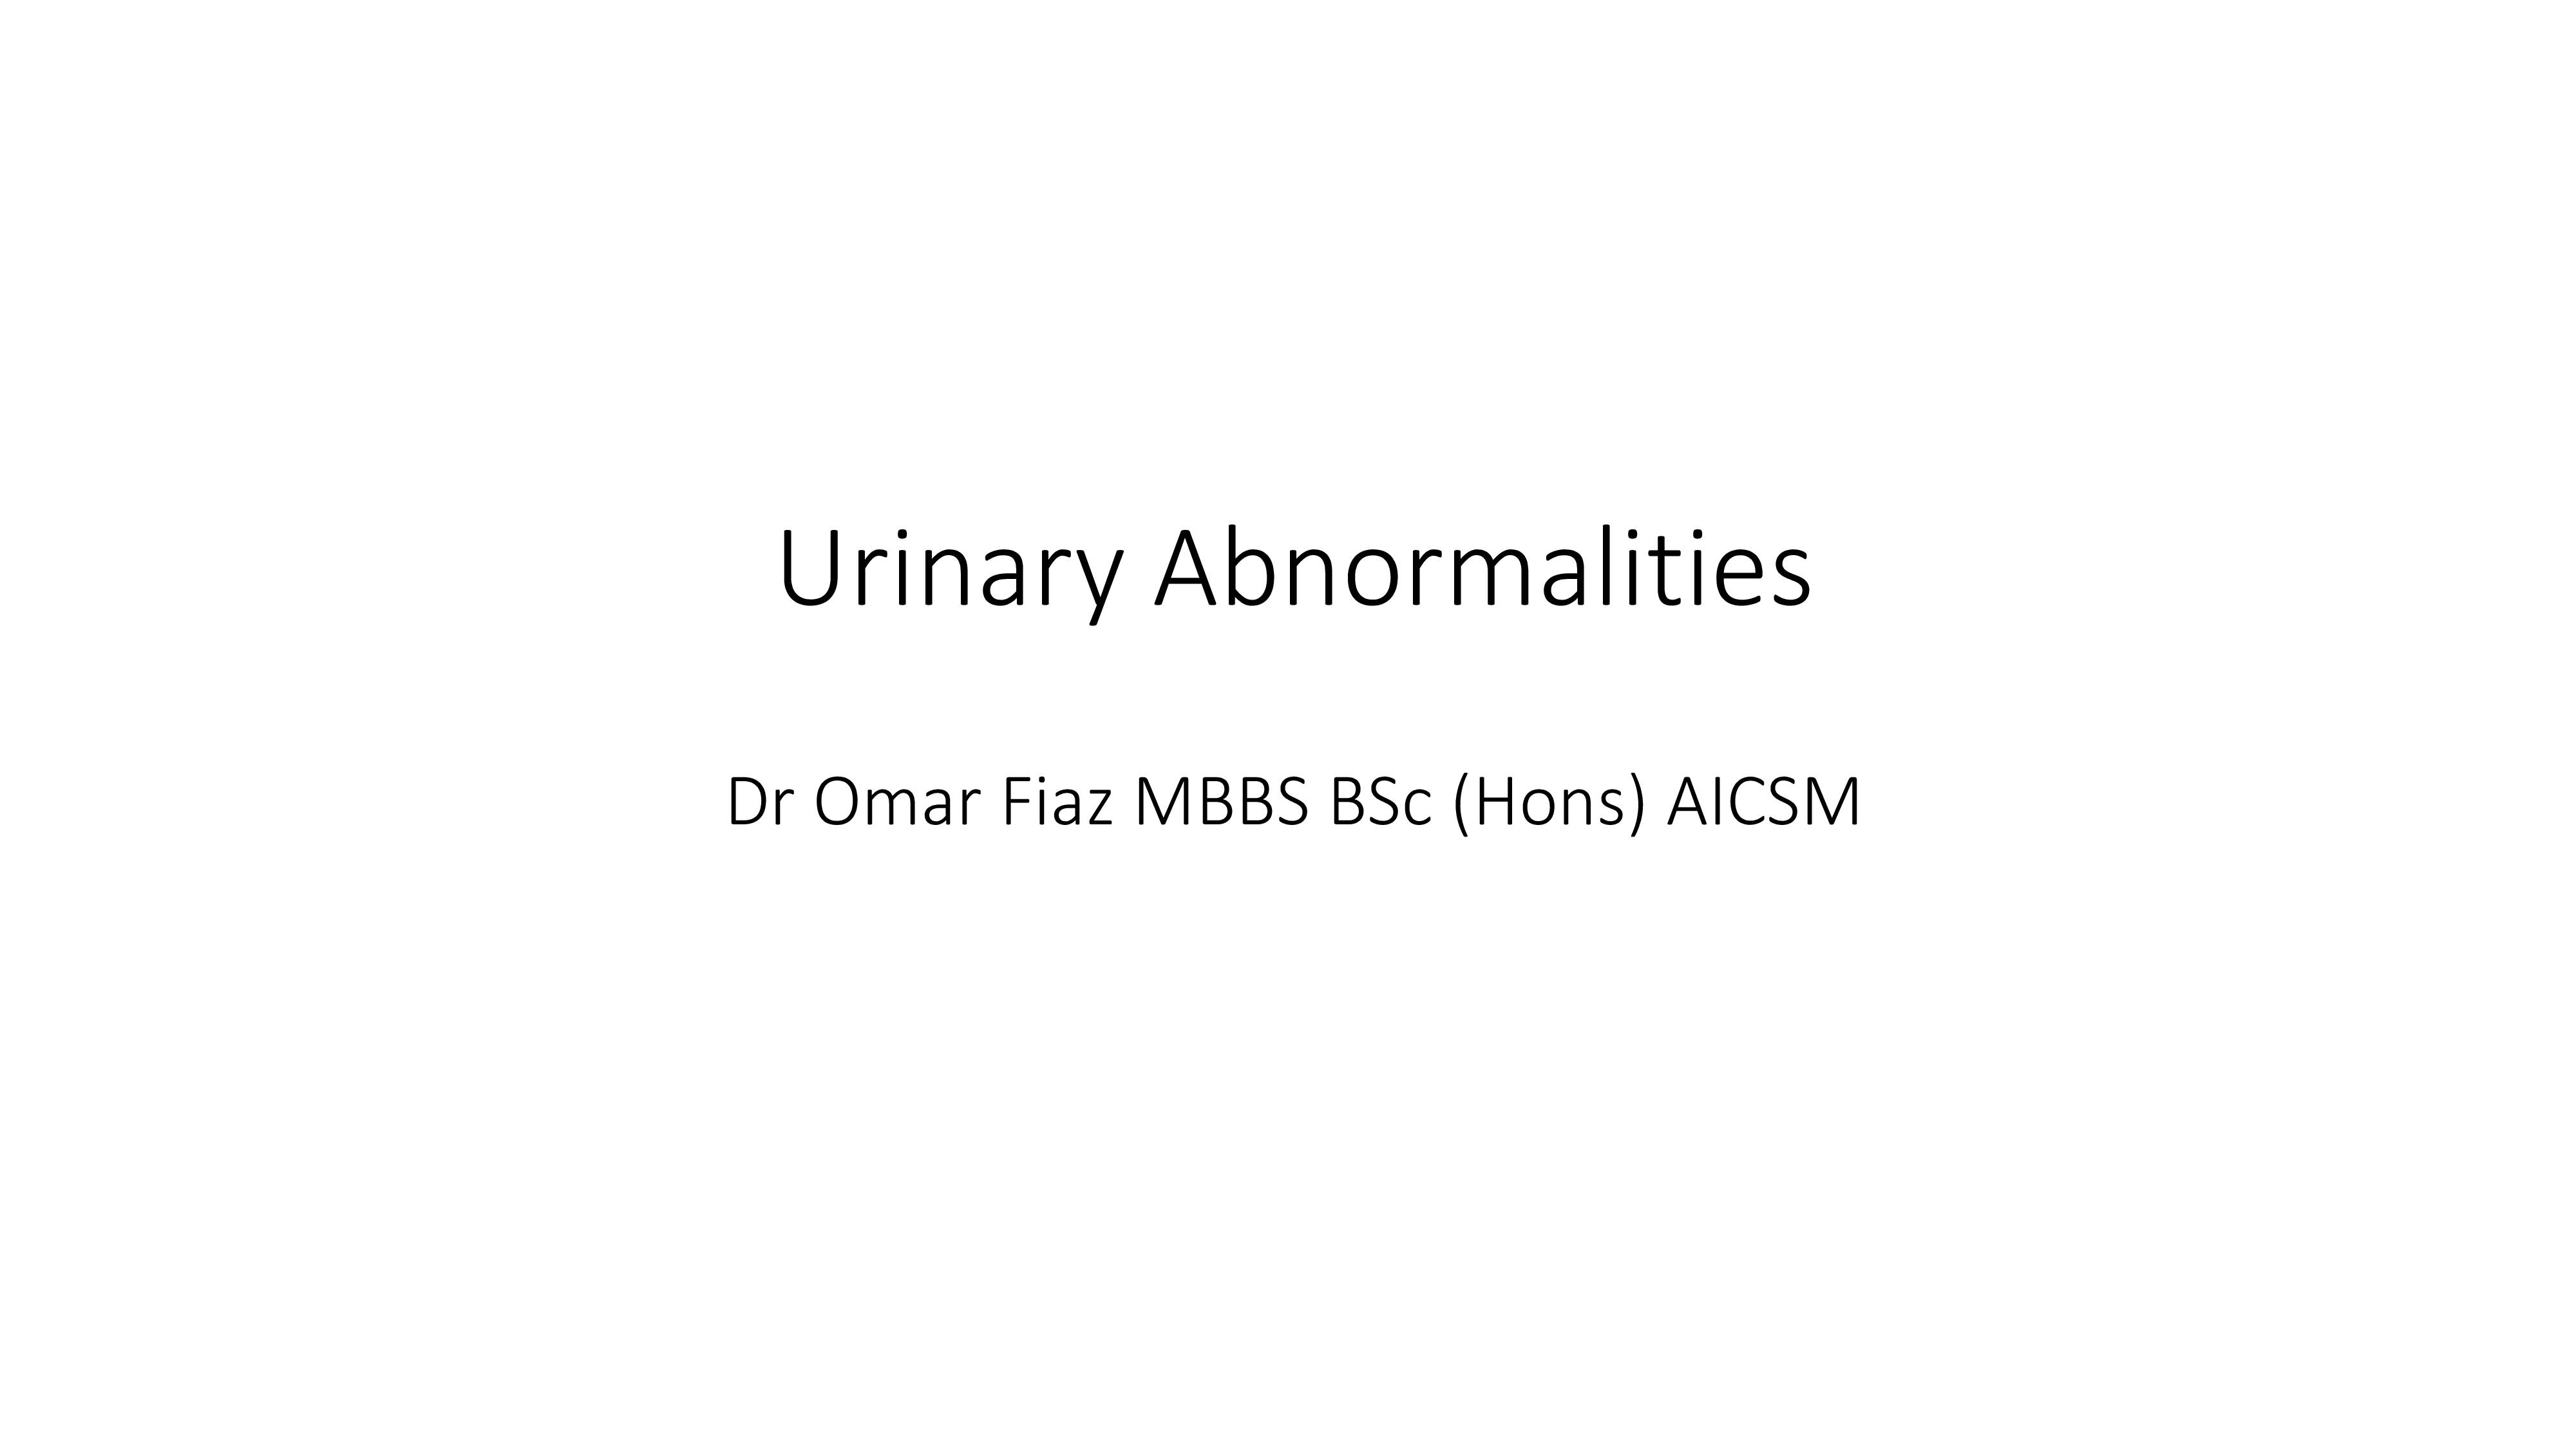 Presentation on Urinary Abnormalities